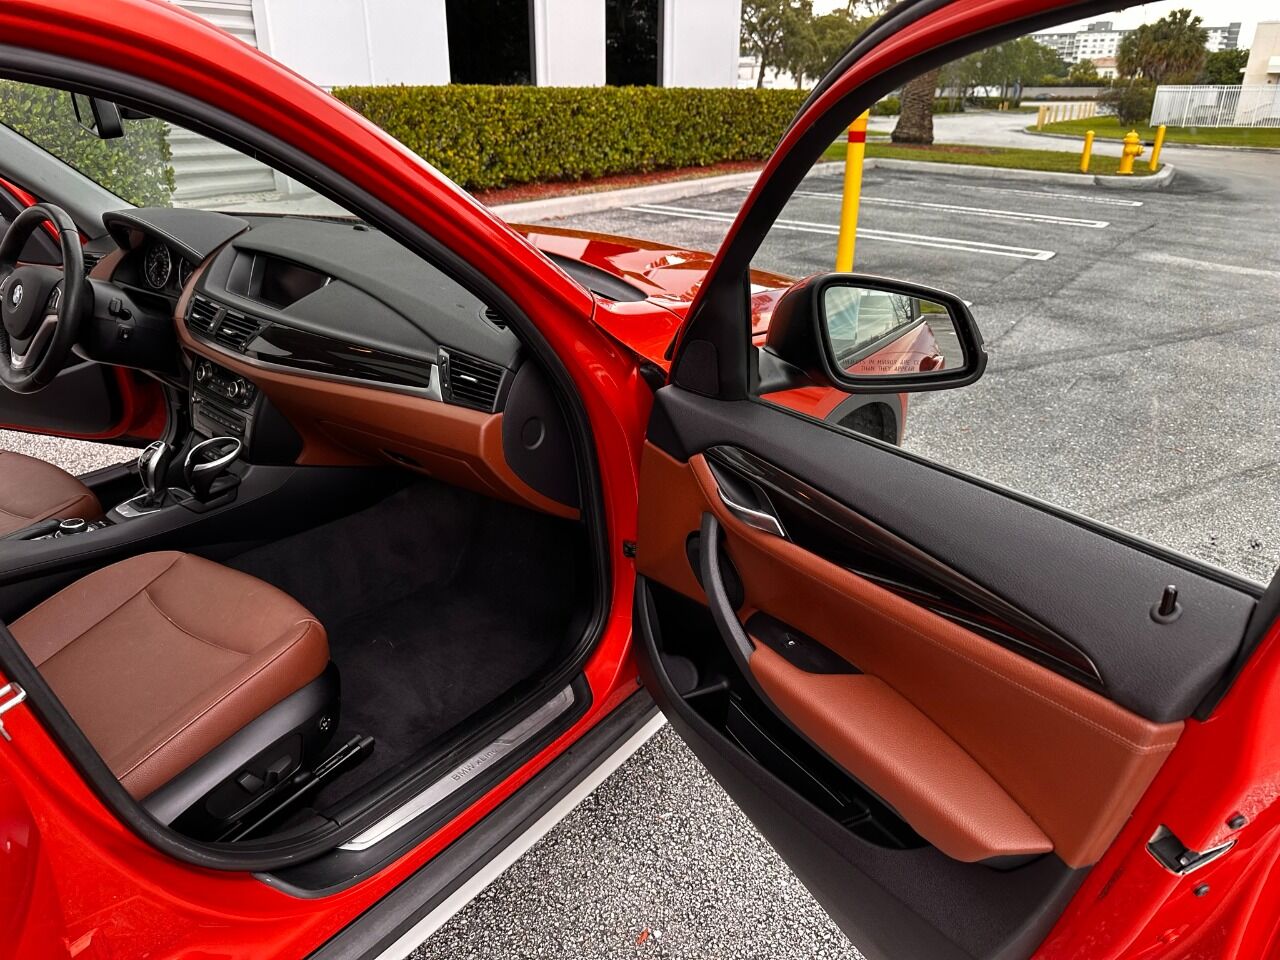 2015 BMW X1 SUV - $12,900